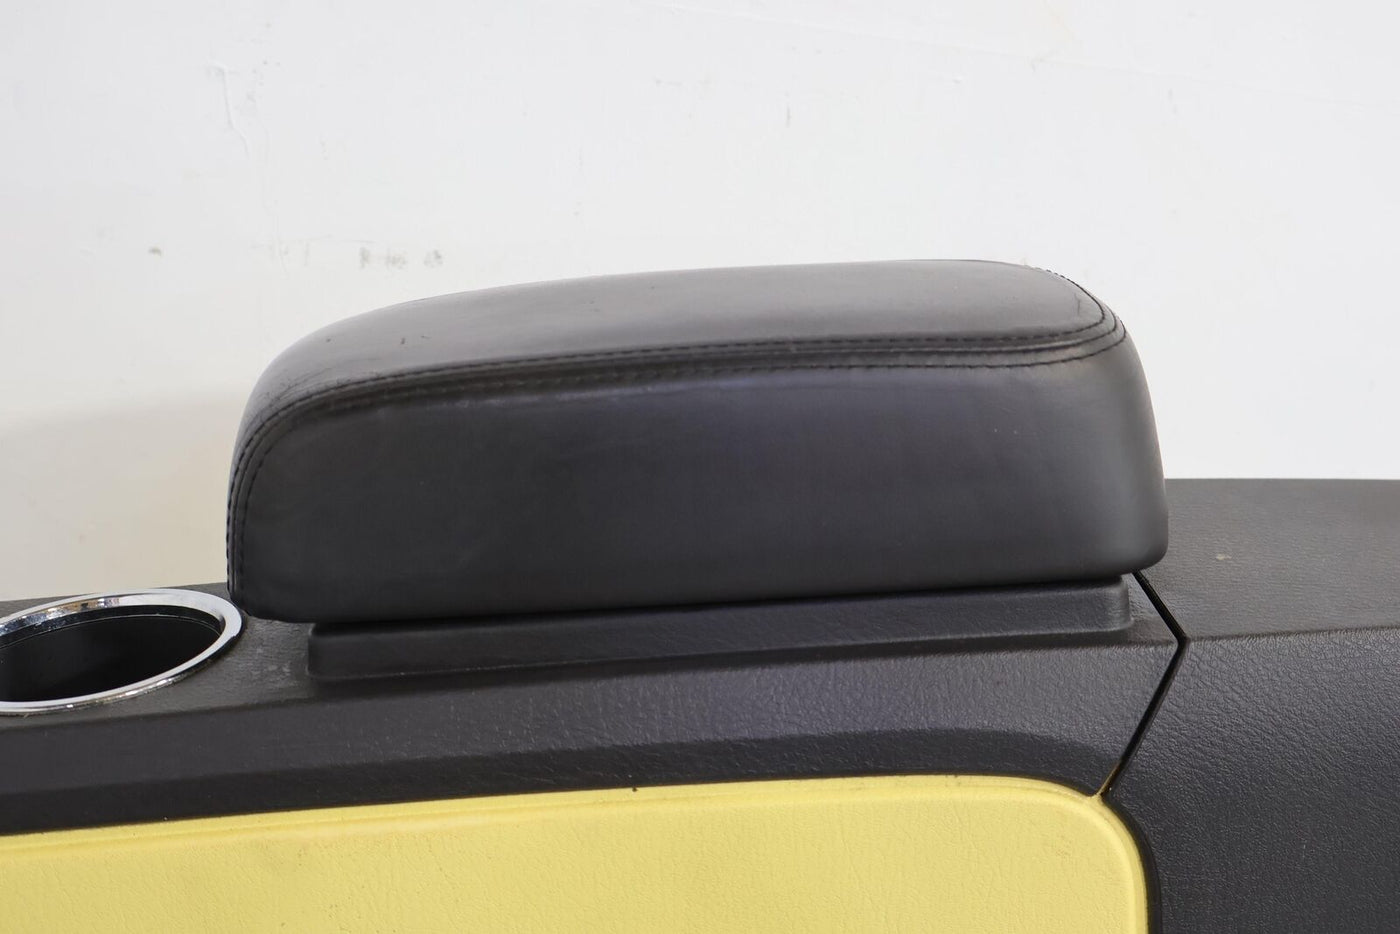 02-05 Ford Thunderbird Center Floor Console W/ Lid (Yellow & Black) Auto